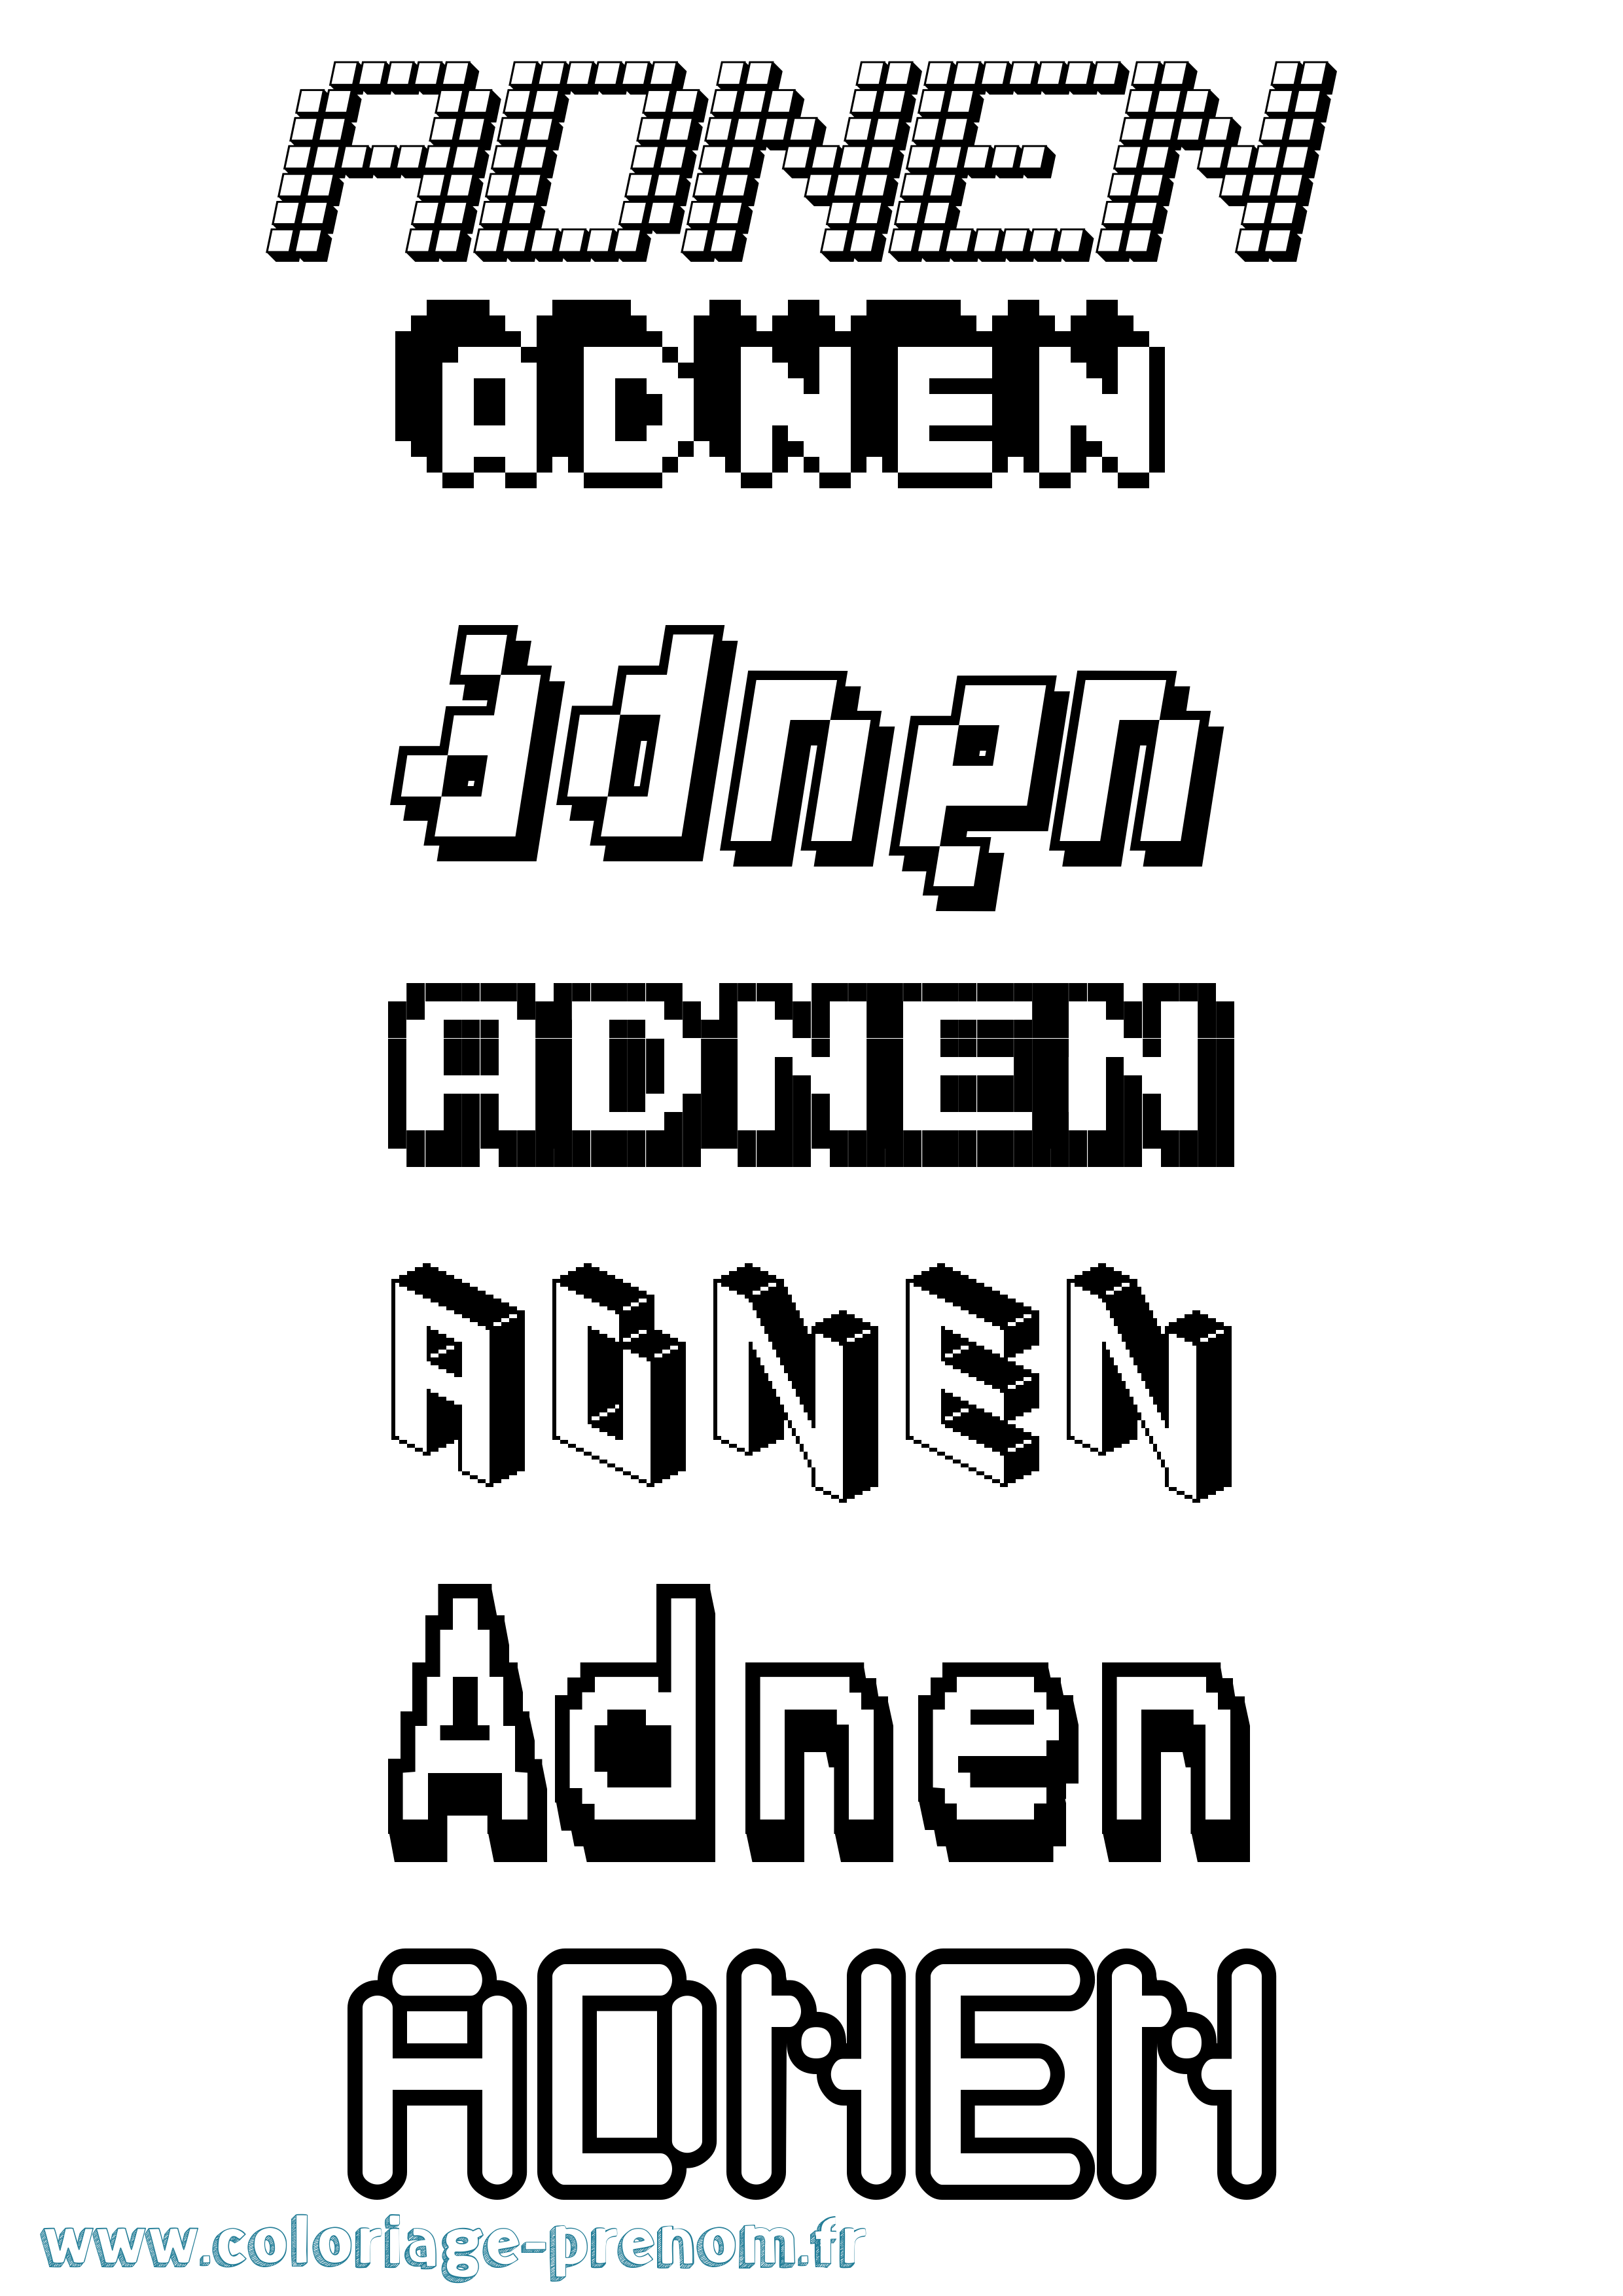 Coloriage prénom Adnen Pixel